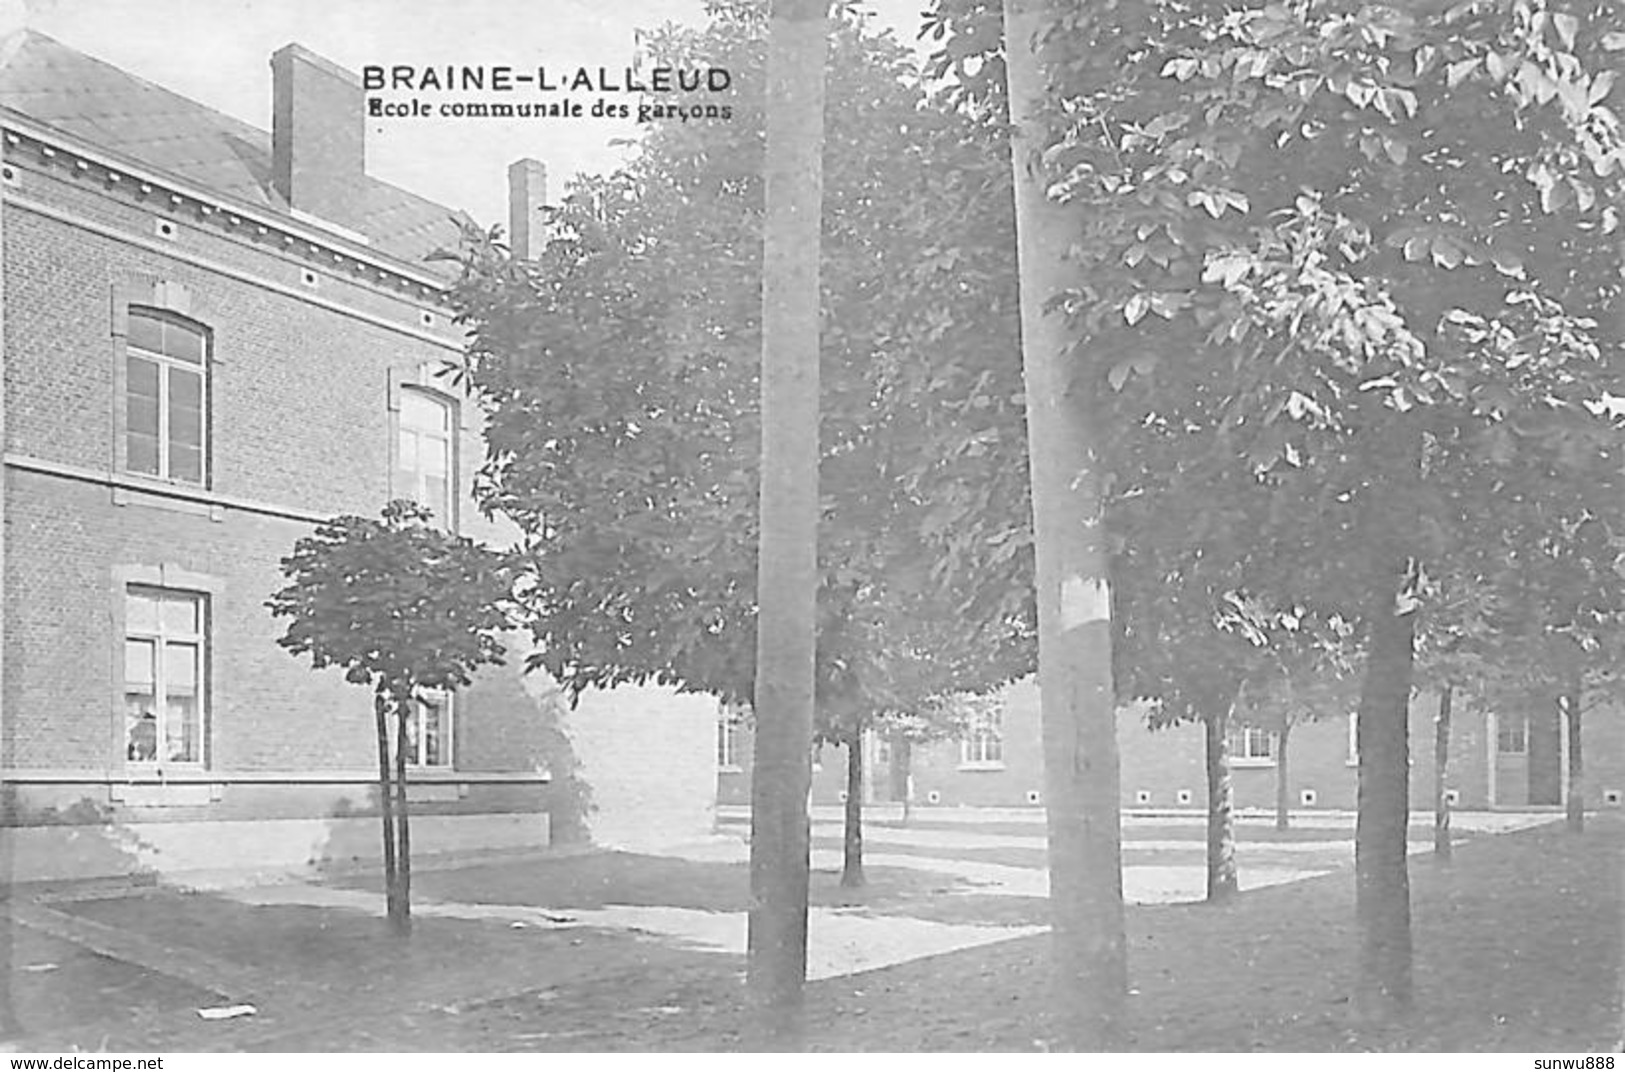 Braine-l'Alleud - Ecole Communale Des Garçons (Edit. M. Glibert-Flamand) - Braine-l'Alleud